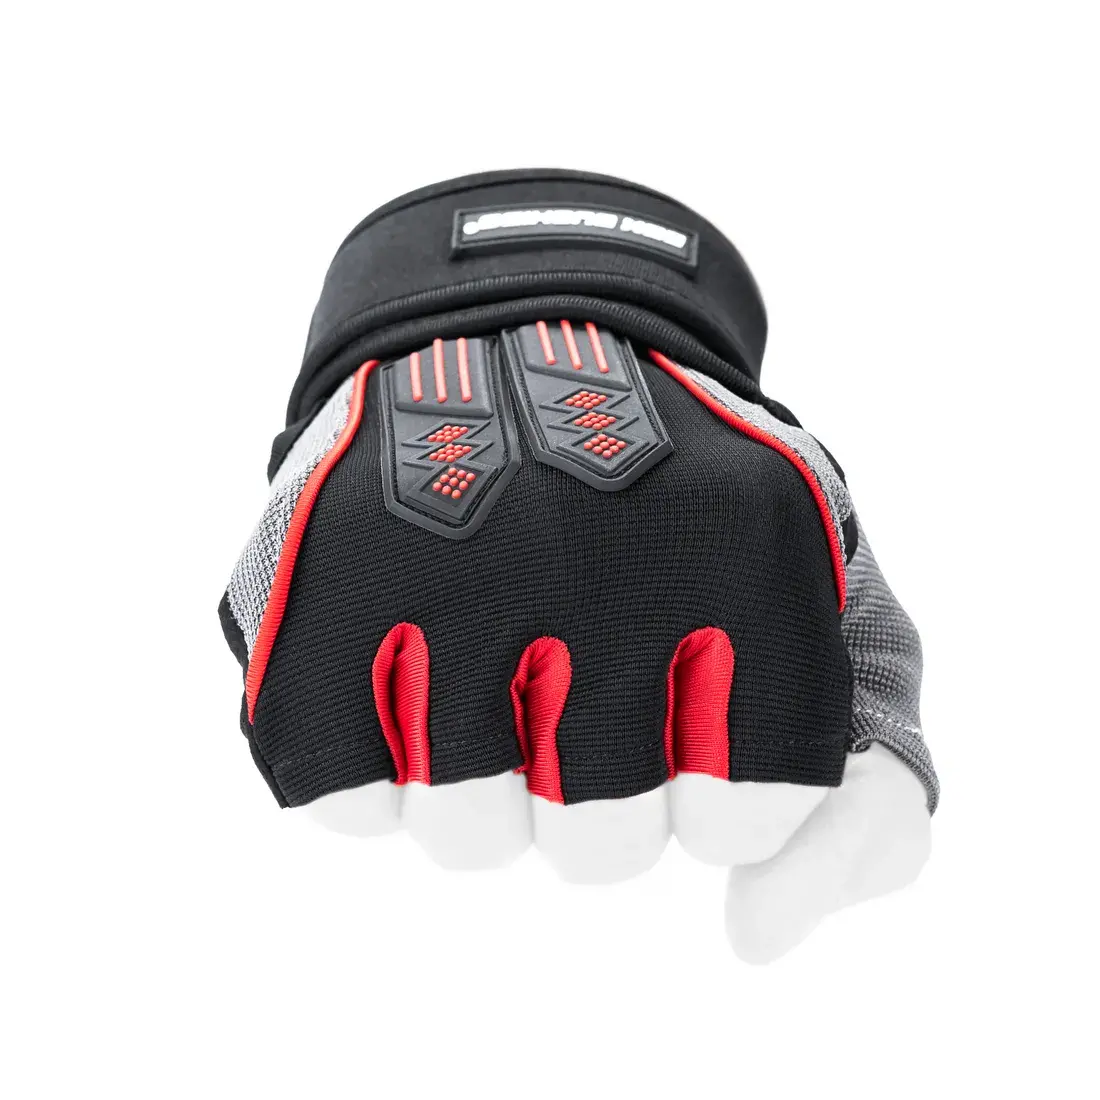 DBX gym gloves